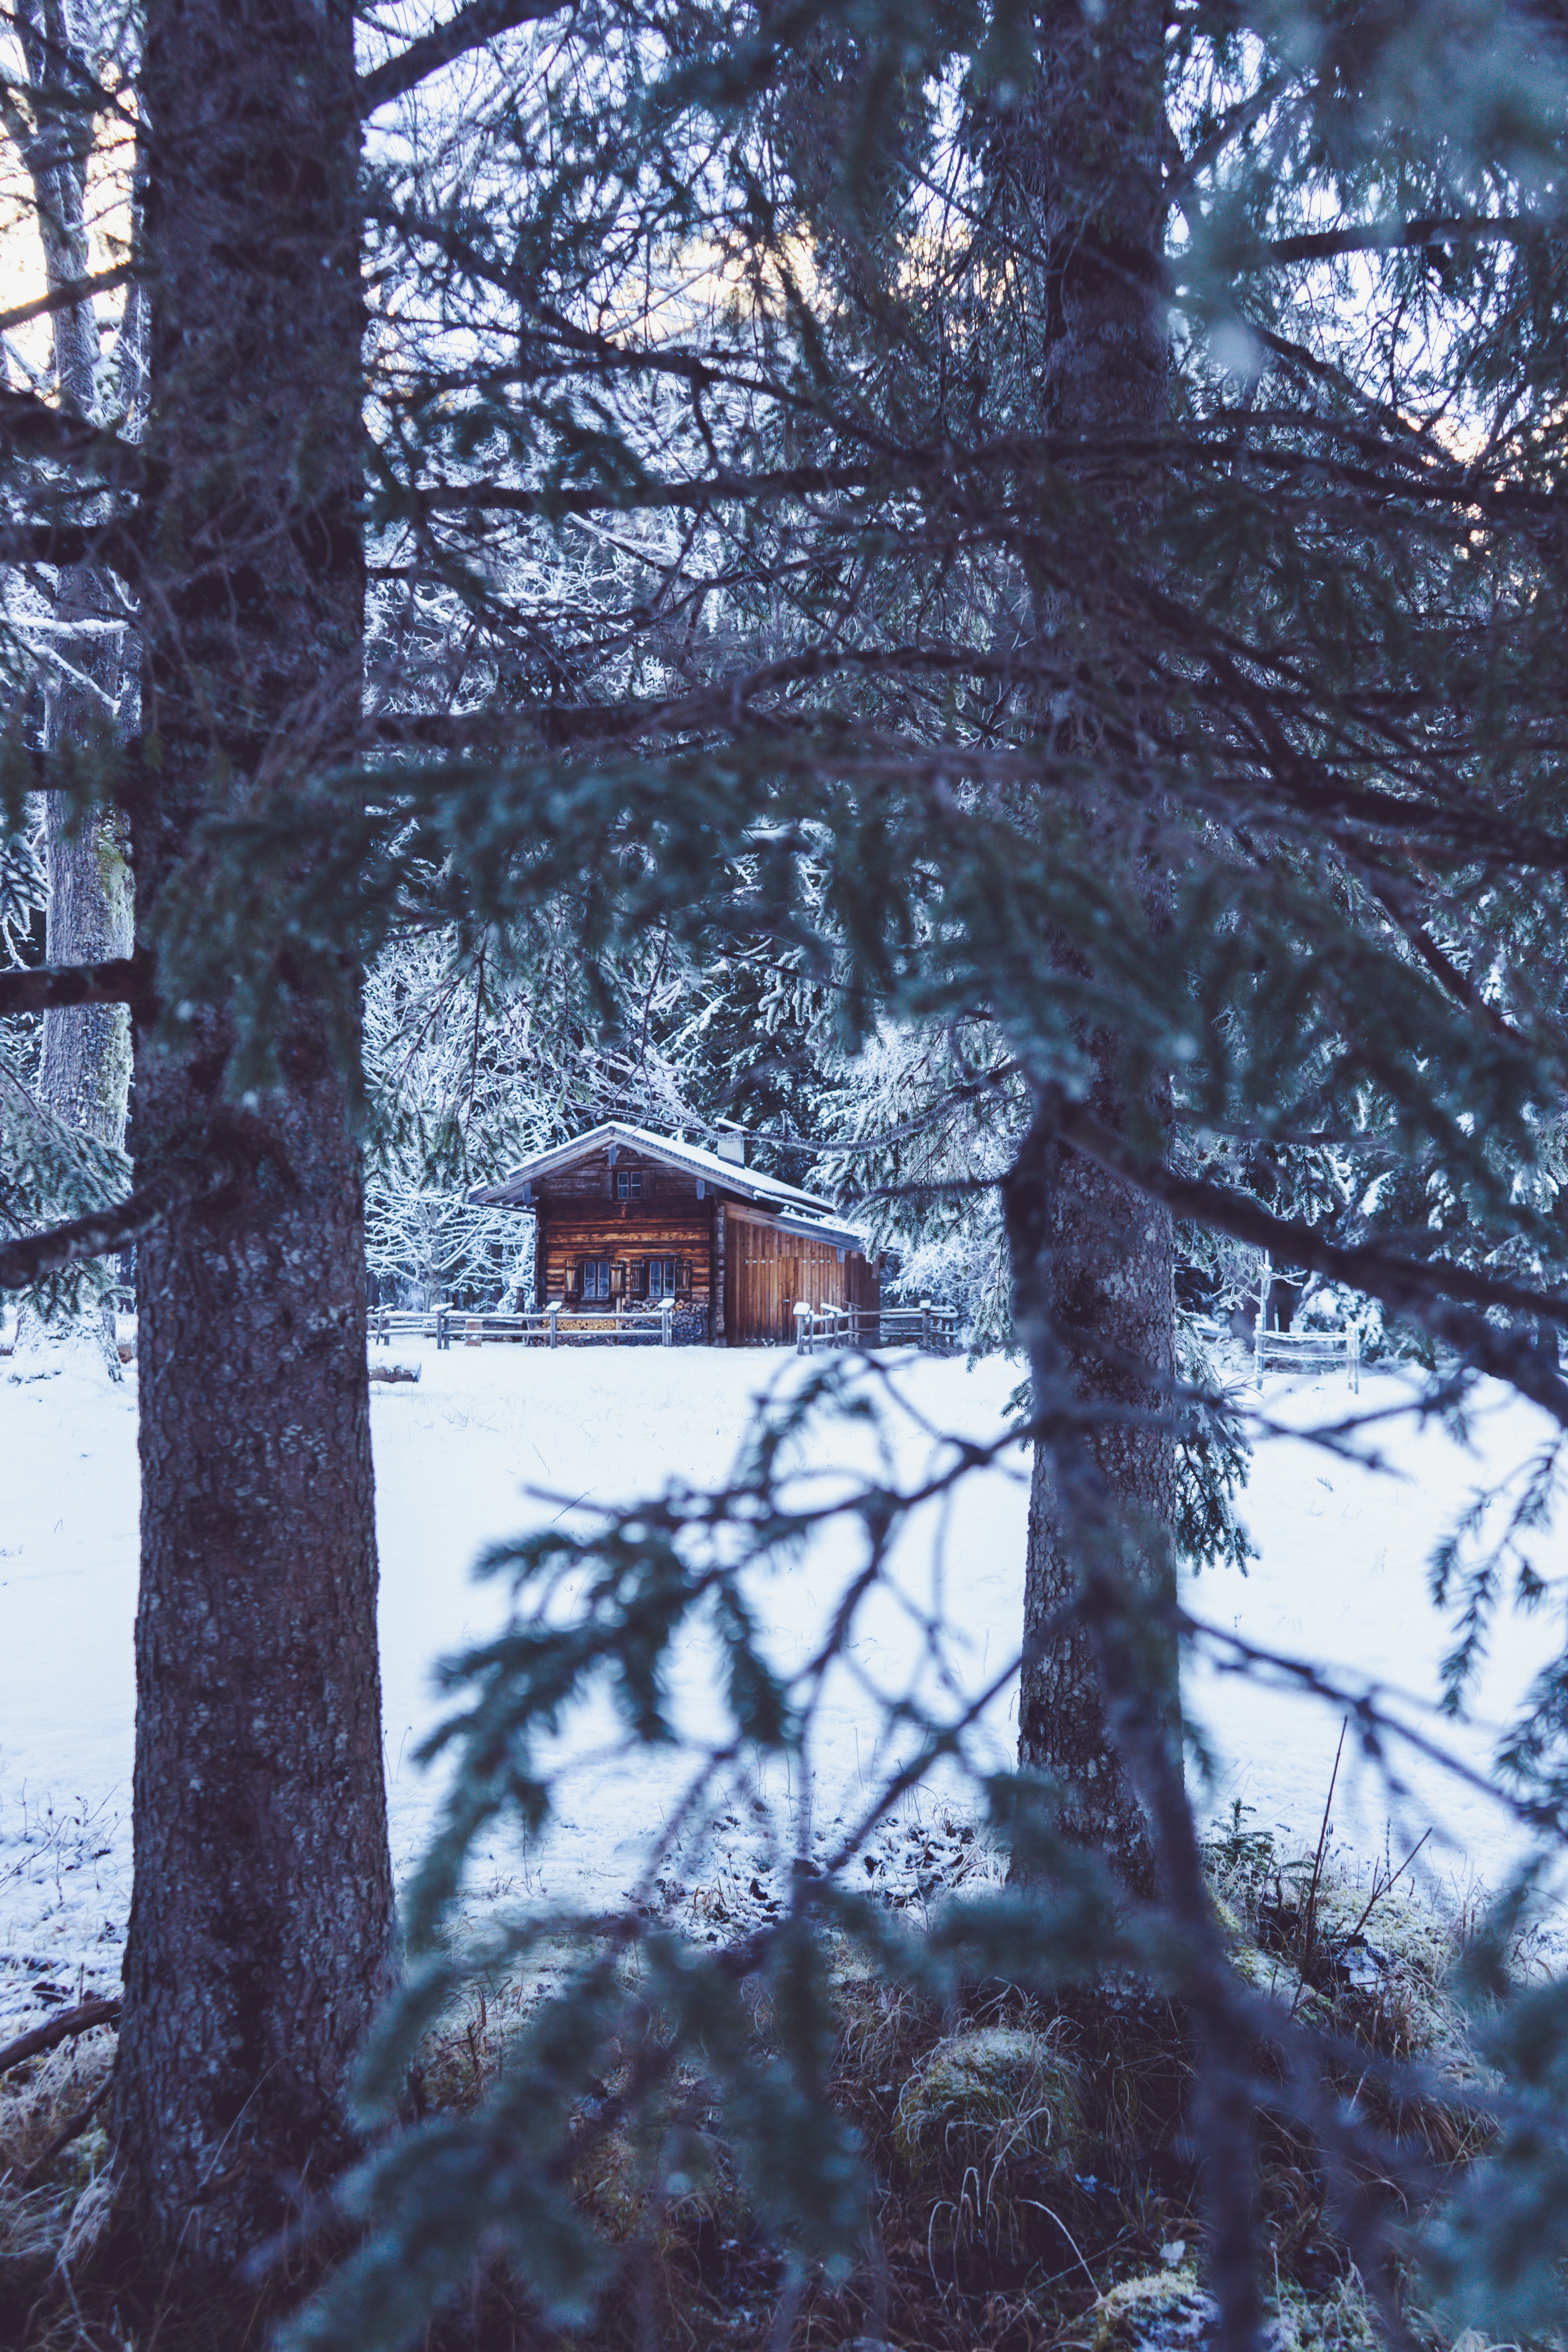 143426 descargar imagen invierno, naturaleza, árboles, nieve, casa, cabaña, choza: fondos de pantalla y protectores de pantalla gratis